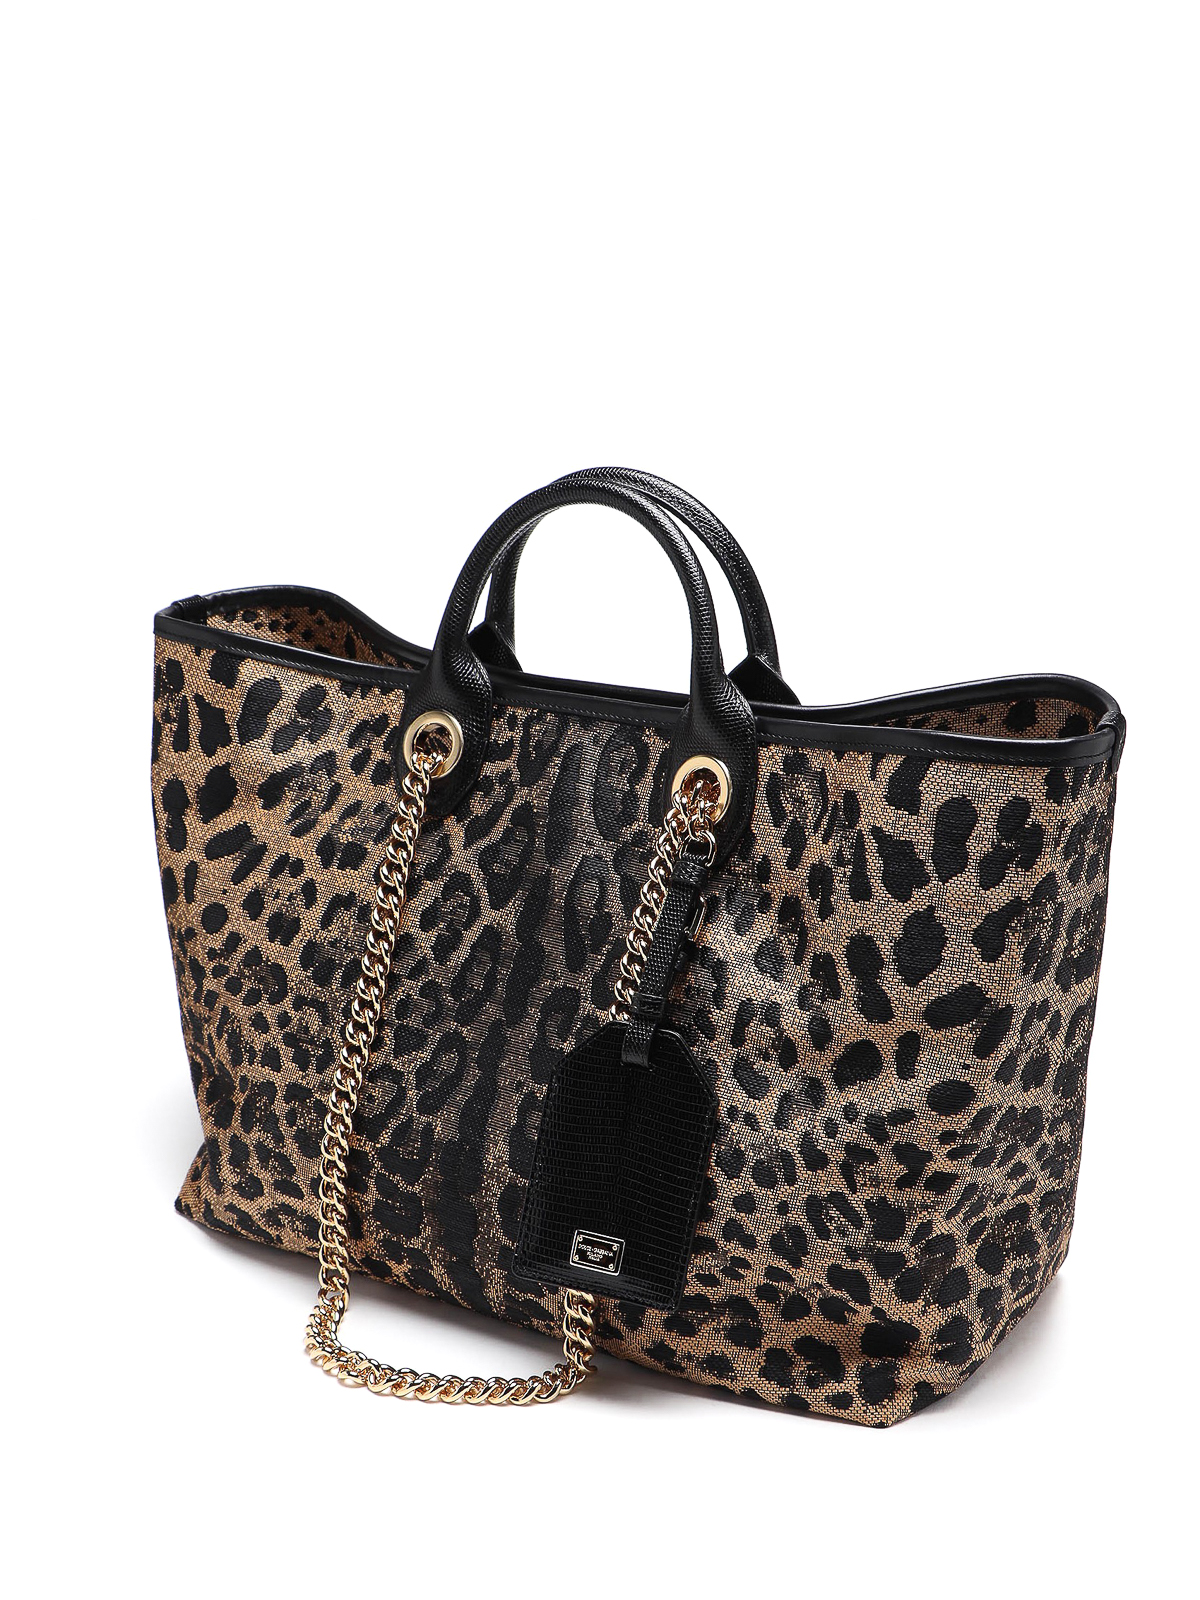 Dolce & Gabbana, Bags, Dolce Gabbana Cheetah Print Bag